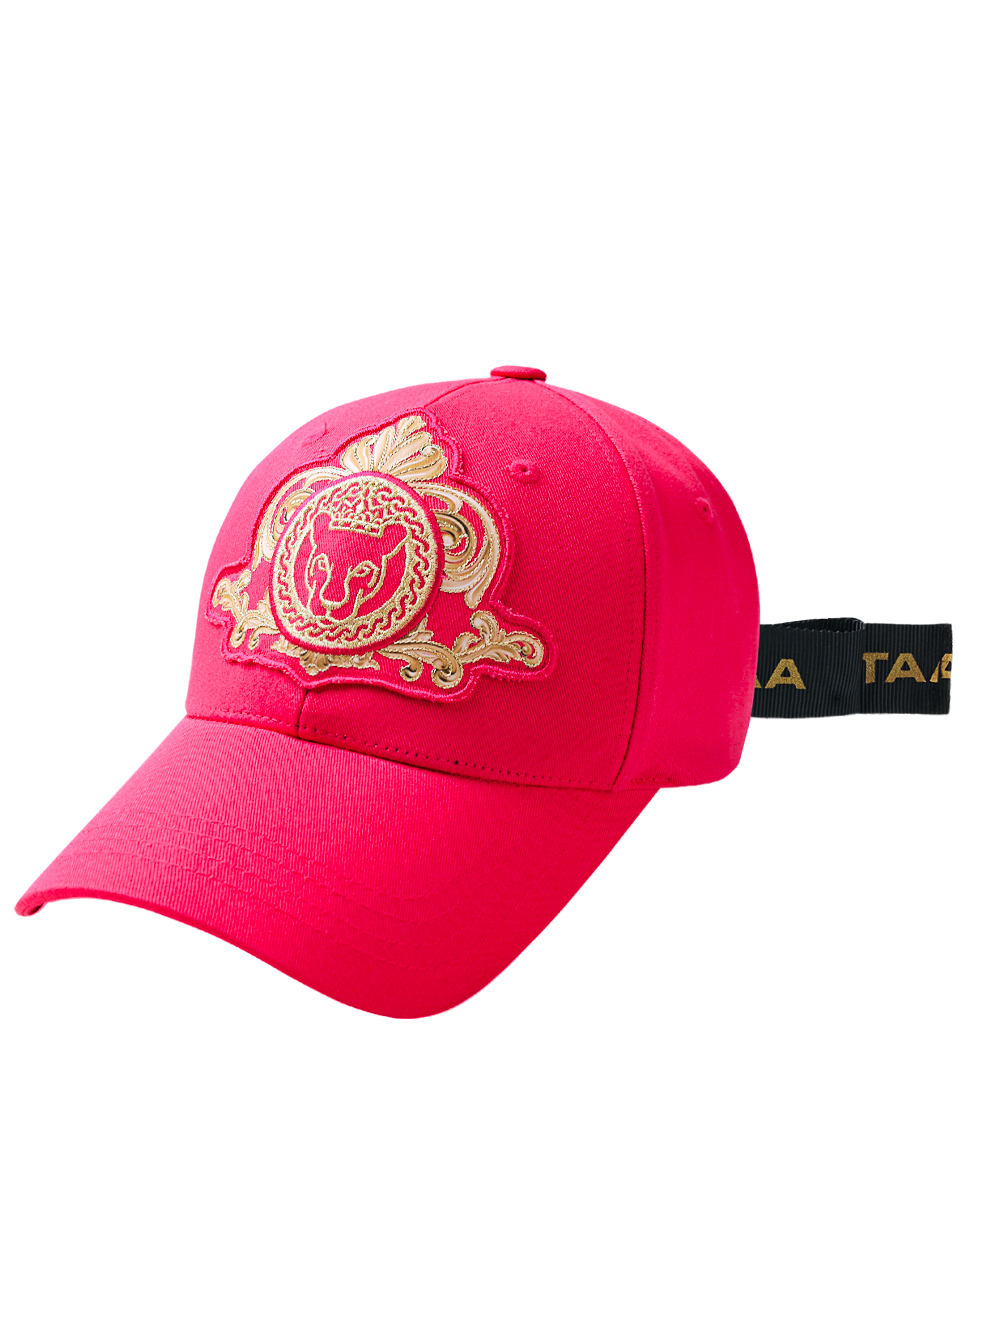 UTAA Grand Gold Crown Panther Ribbon Cap : Pink (UD0GCU286PK)